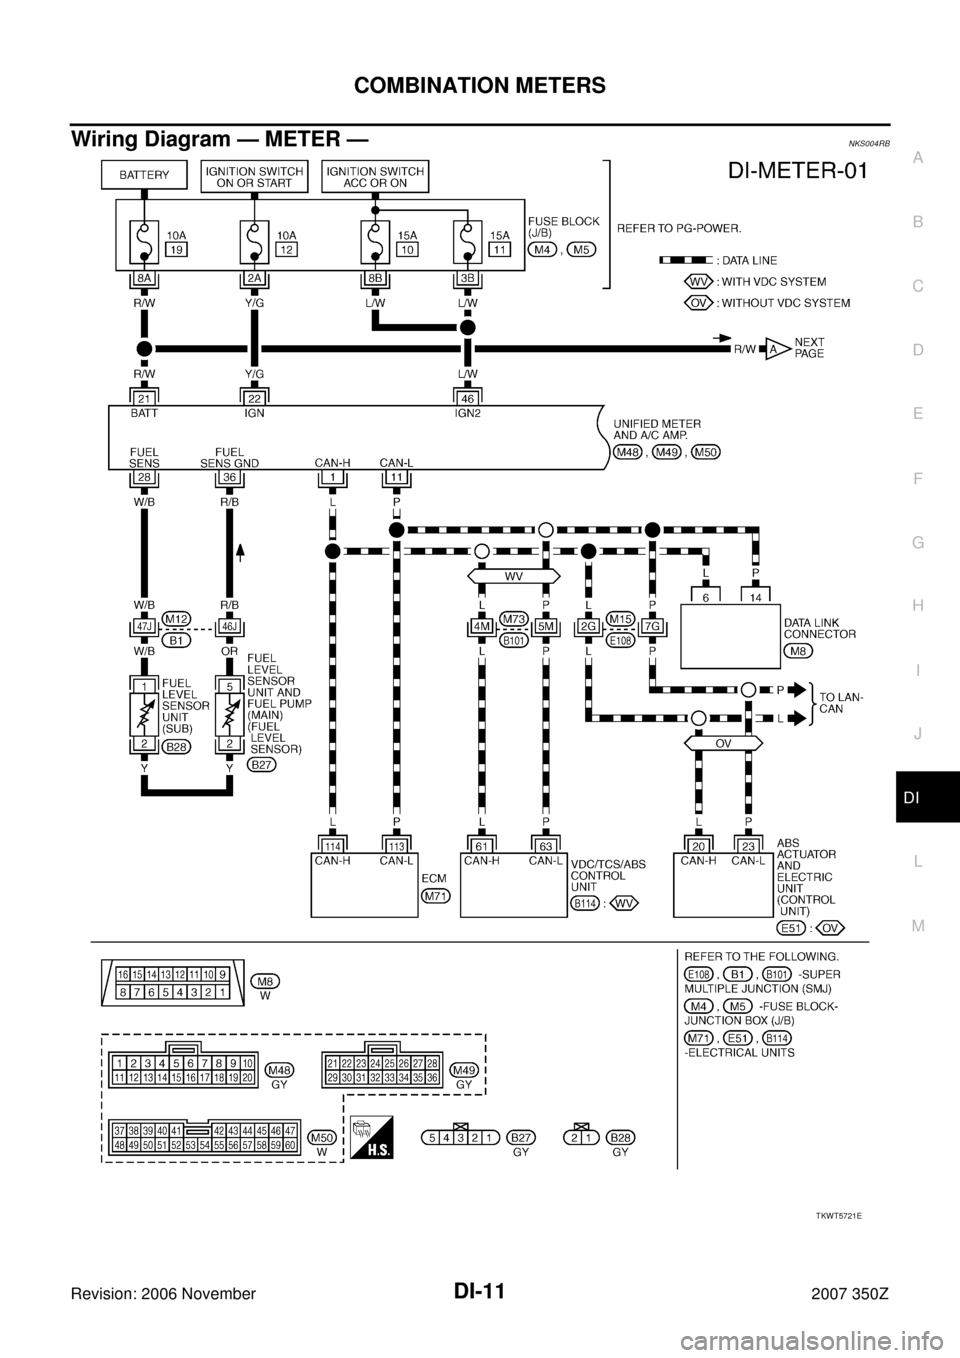 NISSAN 350Z 2007 Z33 Driver Information Manual COMBINATION METERS
DI-11
C
D
E
F
G
H
I
J
L
MA
B
DI
Revision: 2006 November2007 350Z
Wiring Diagram — METER — NKS004RB
TKWT5721E 